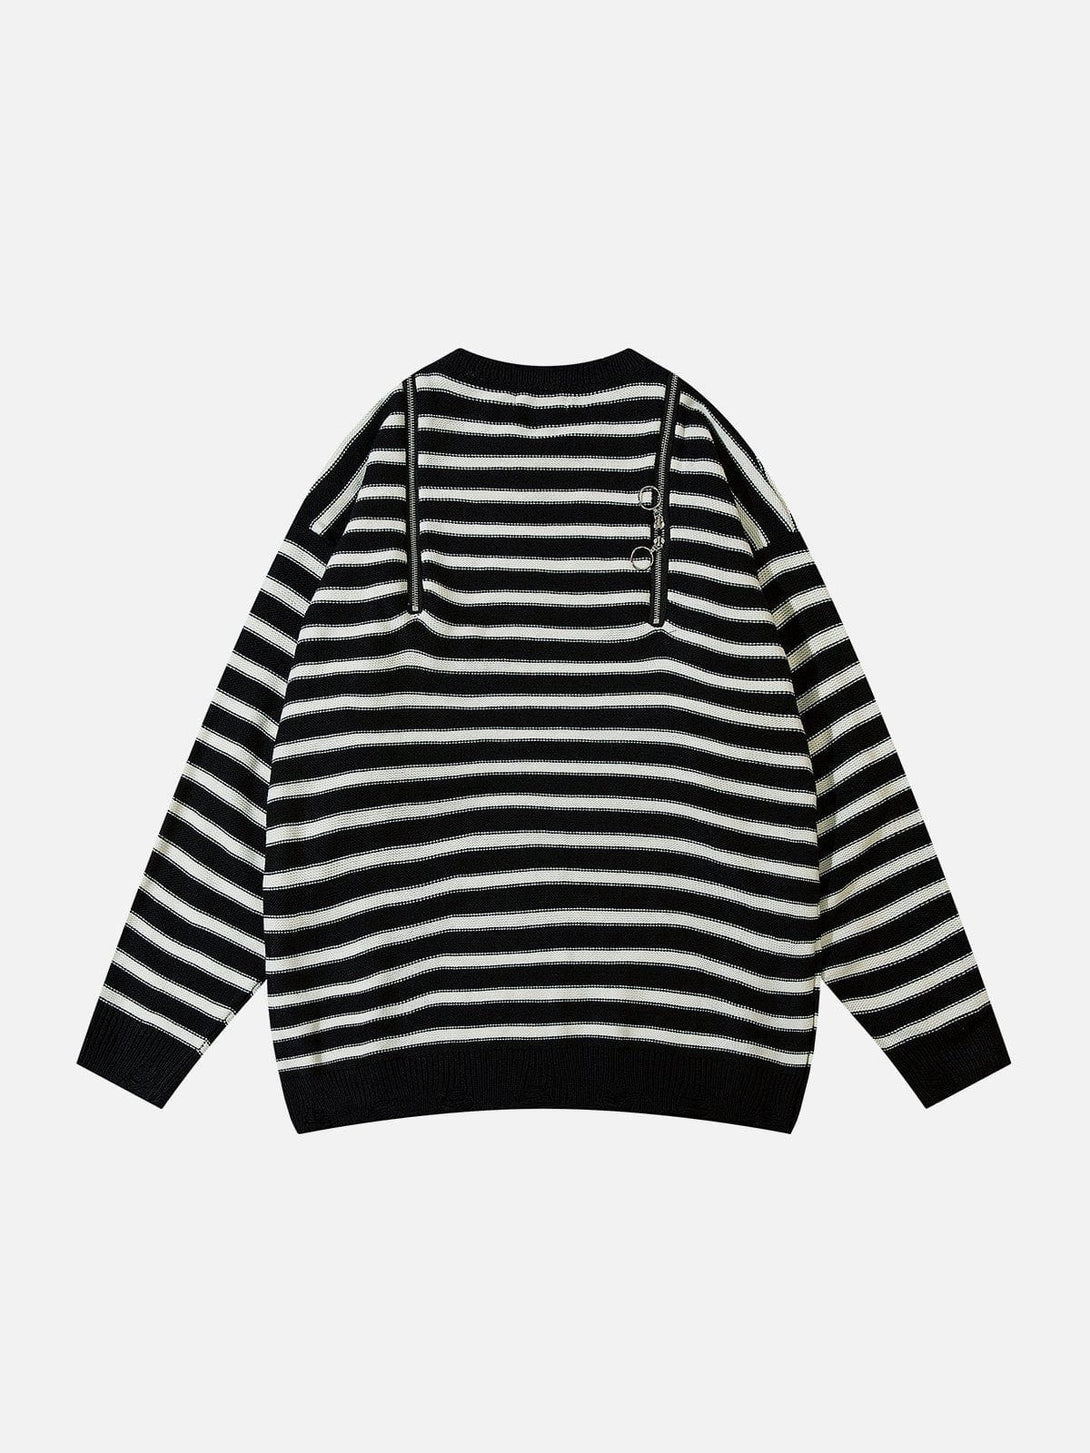 Majesda® - Striped Zipper Design Sweater outfit ideas streetwear fashion